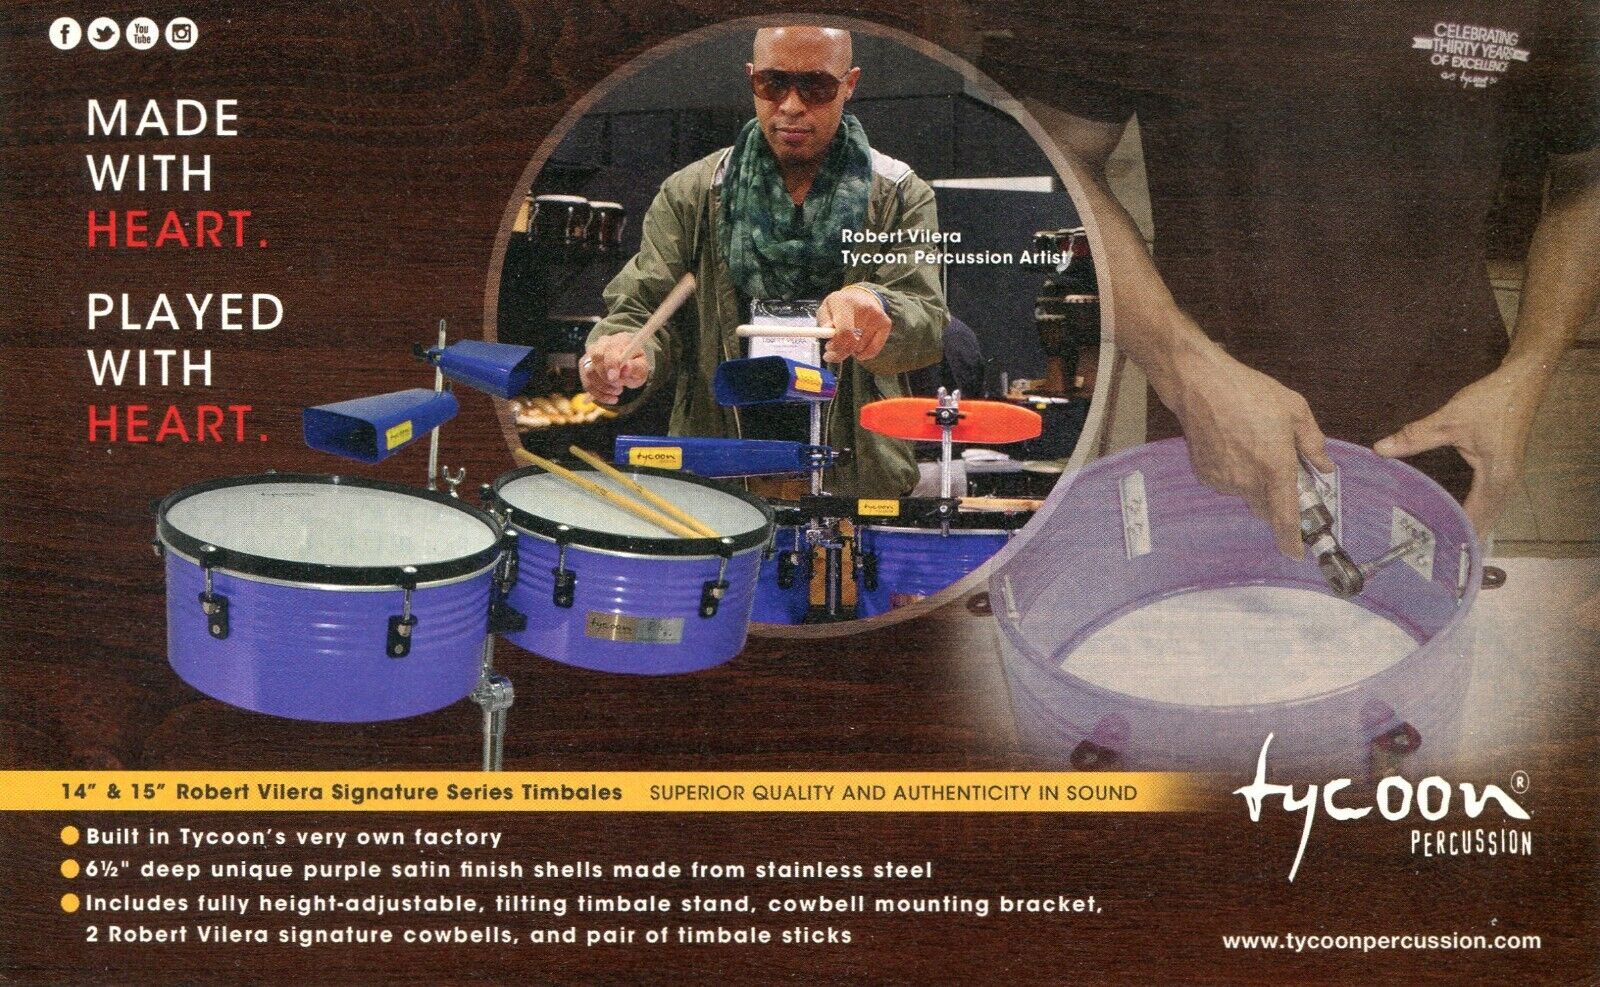 2014 small Print Ad of Tycoon Percussion Robert Vilera Signature Series Timbales